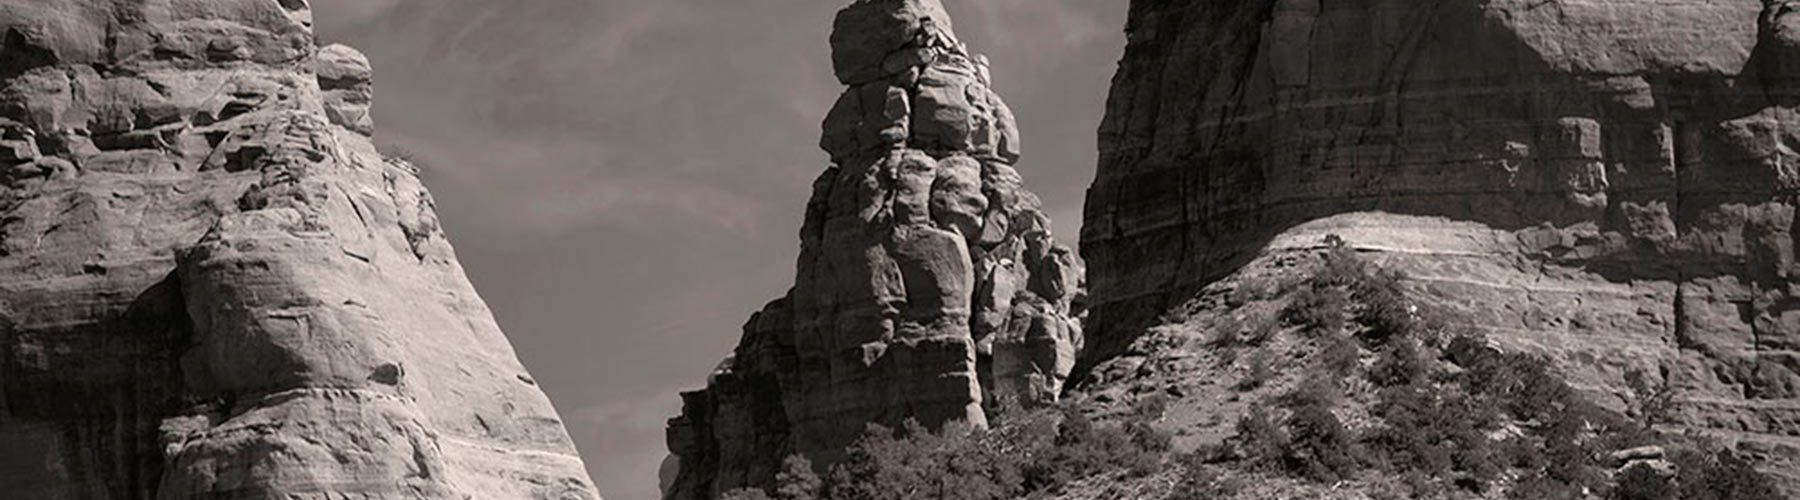 Jan tratnik photography landscape rock formation